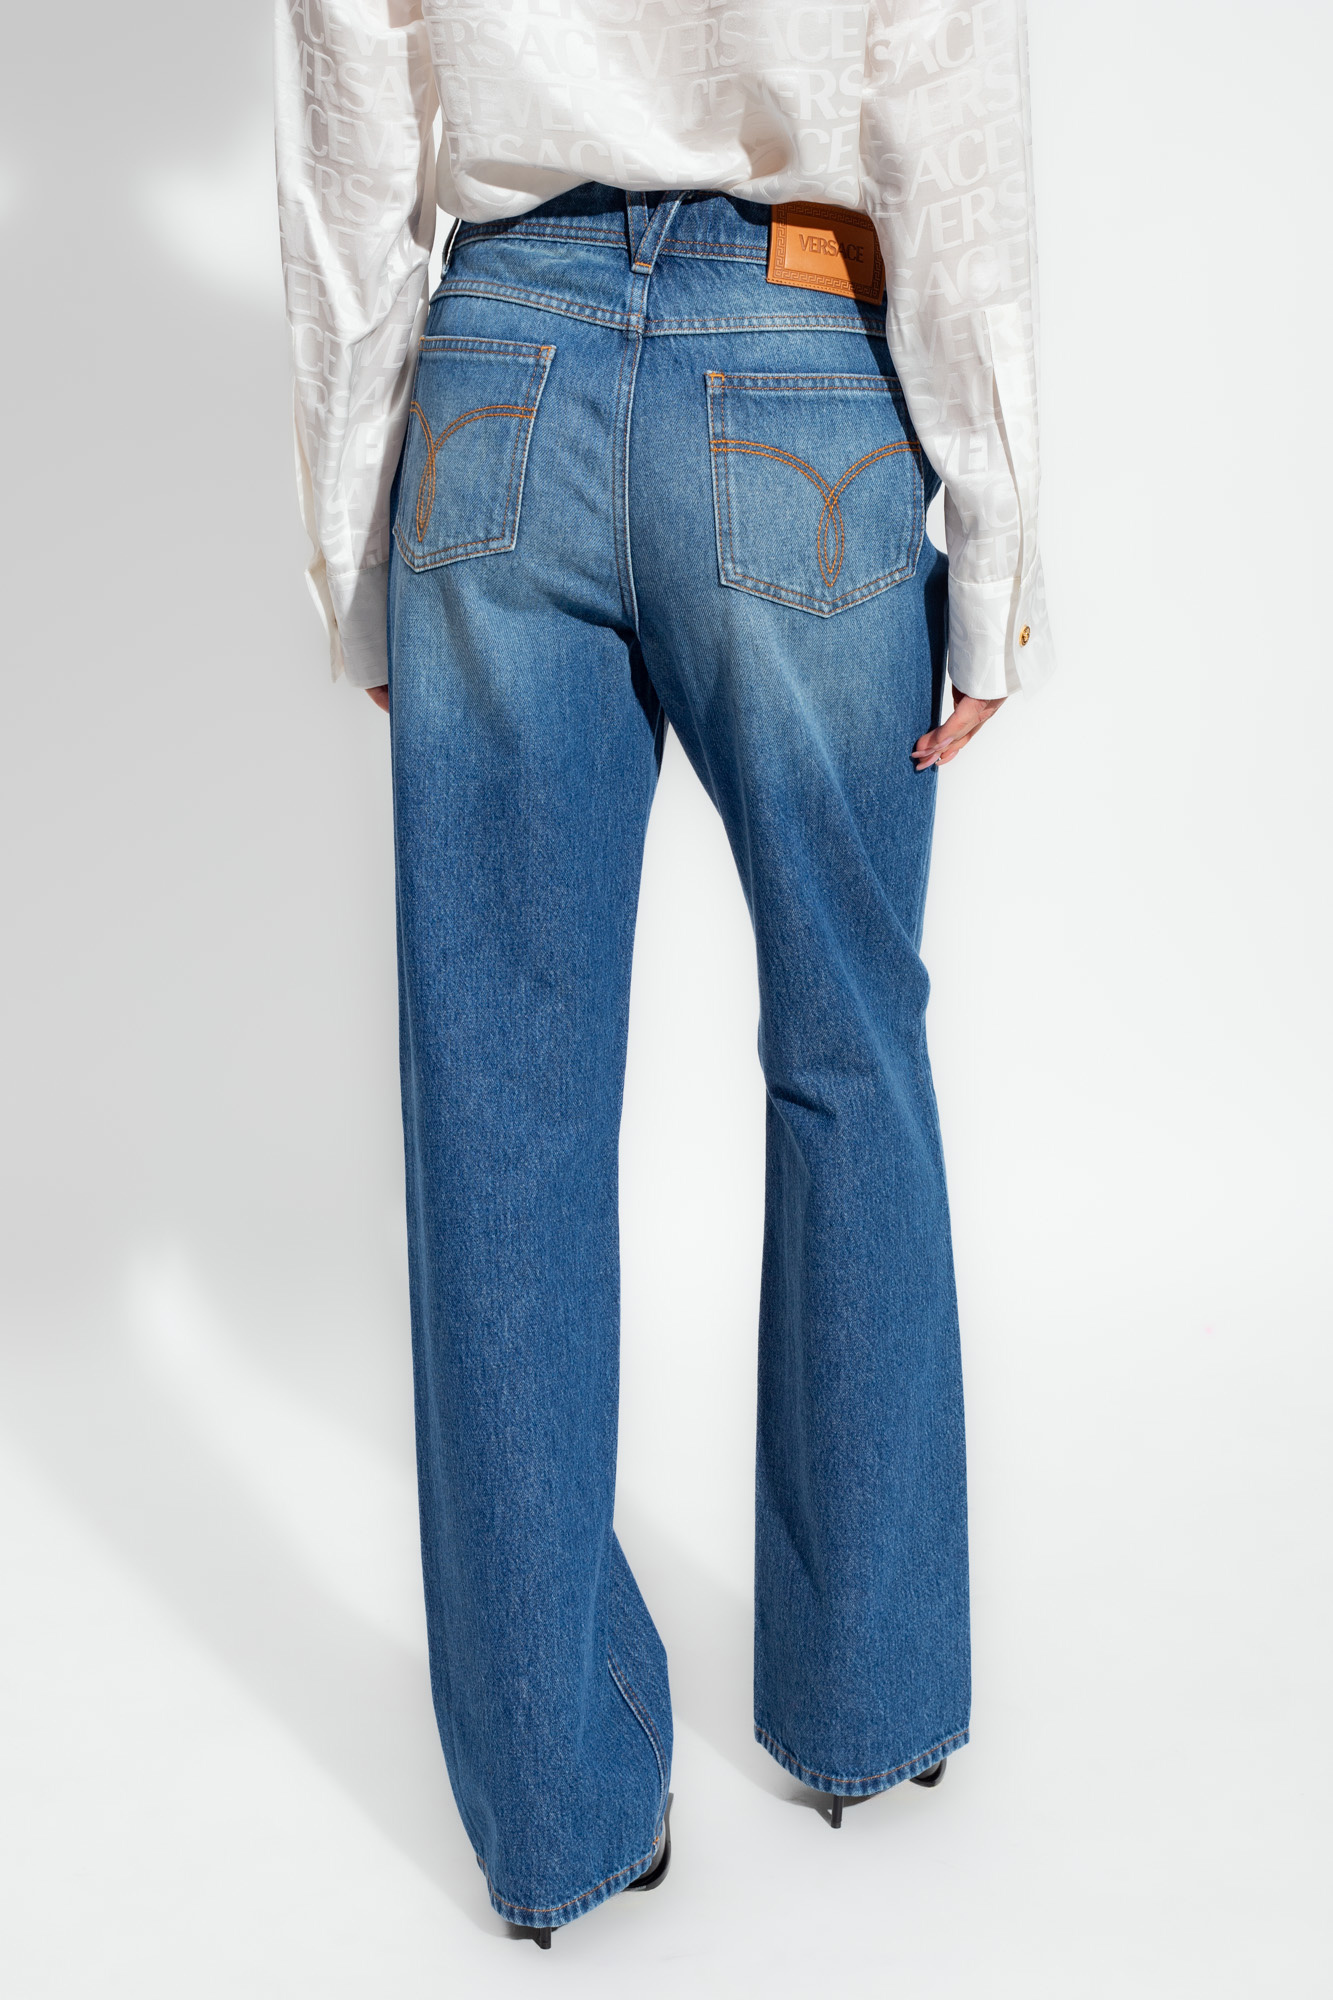 Versace stretch rib jeans